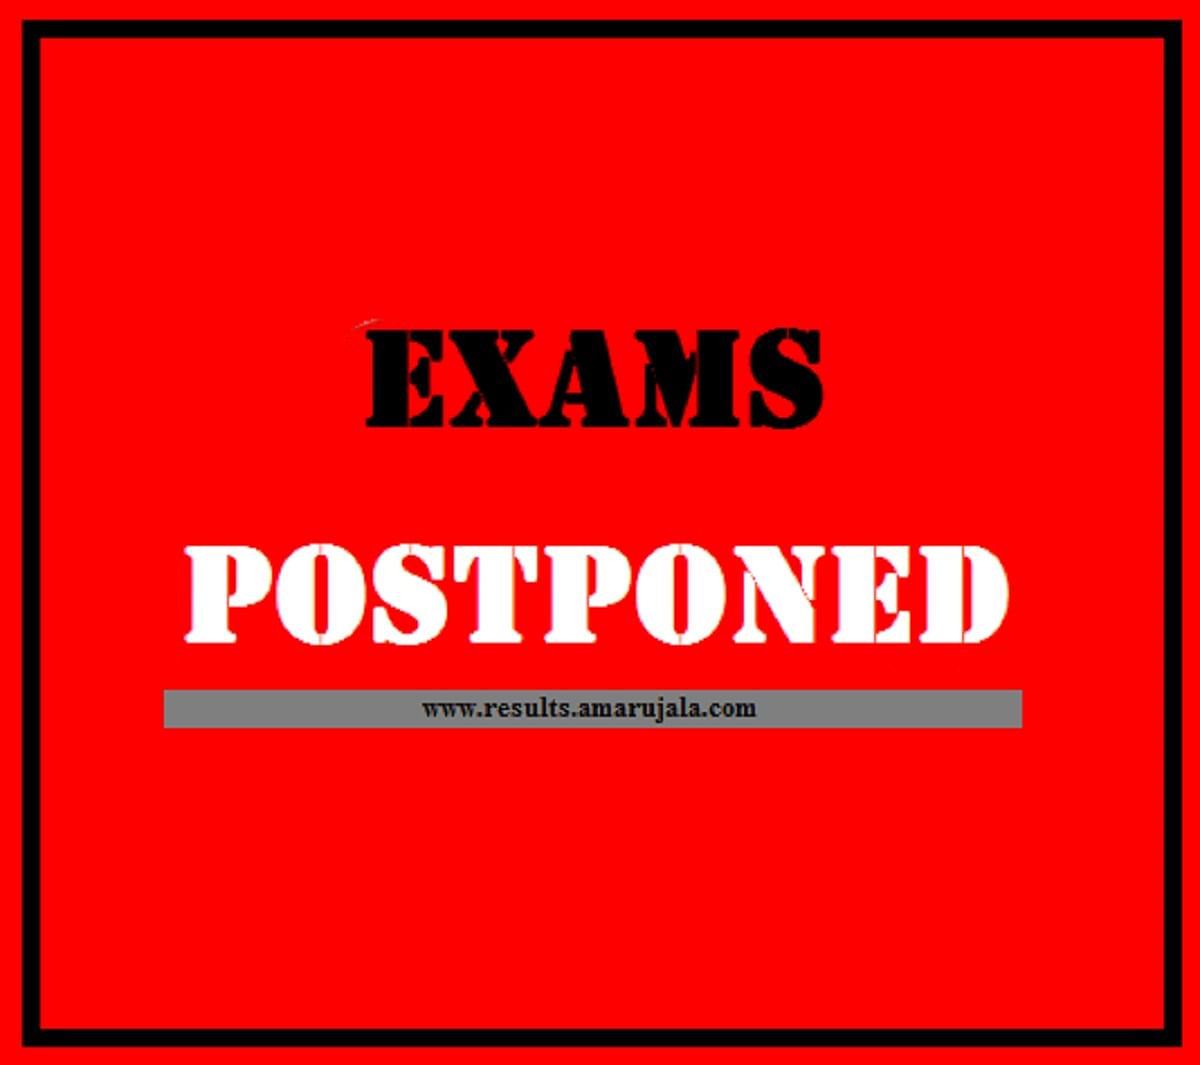 CSBC PET 2020 Postponed for Bihar Constable Vacancies, New Exam Dates Expected Soon